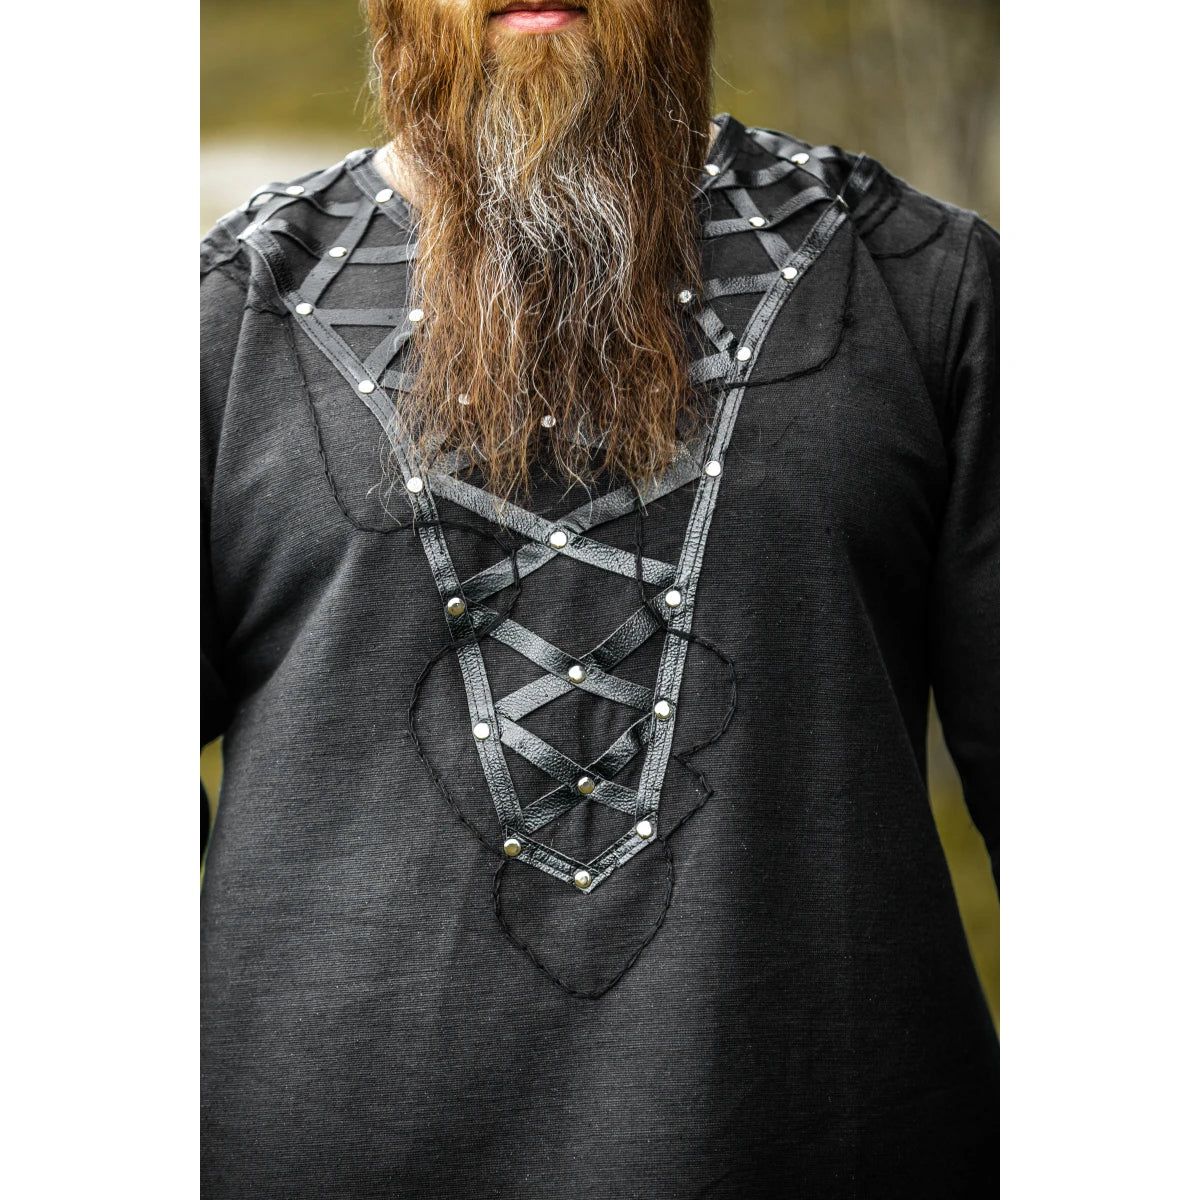 black long sleeve viking tunic with leather trim